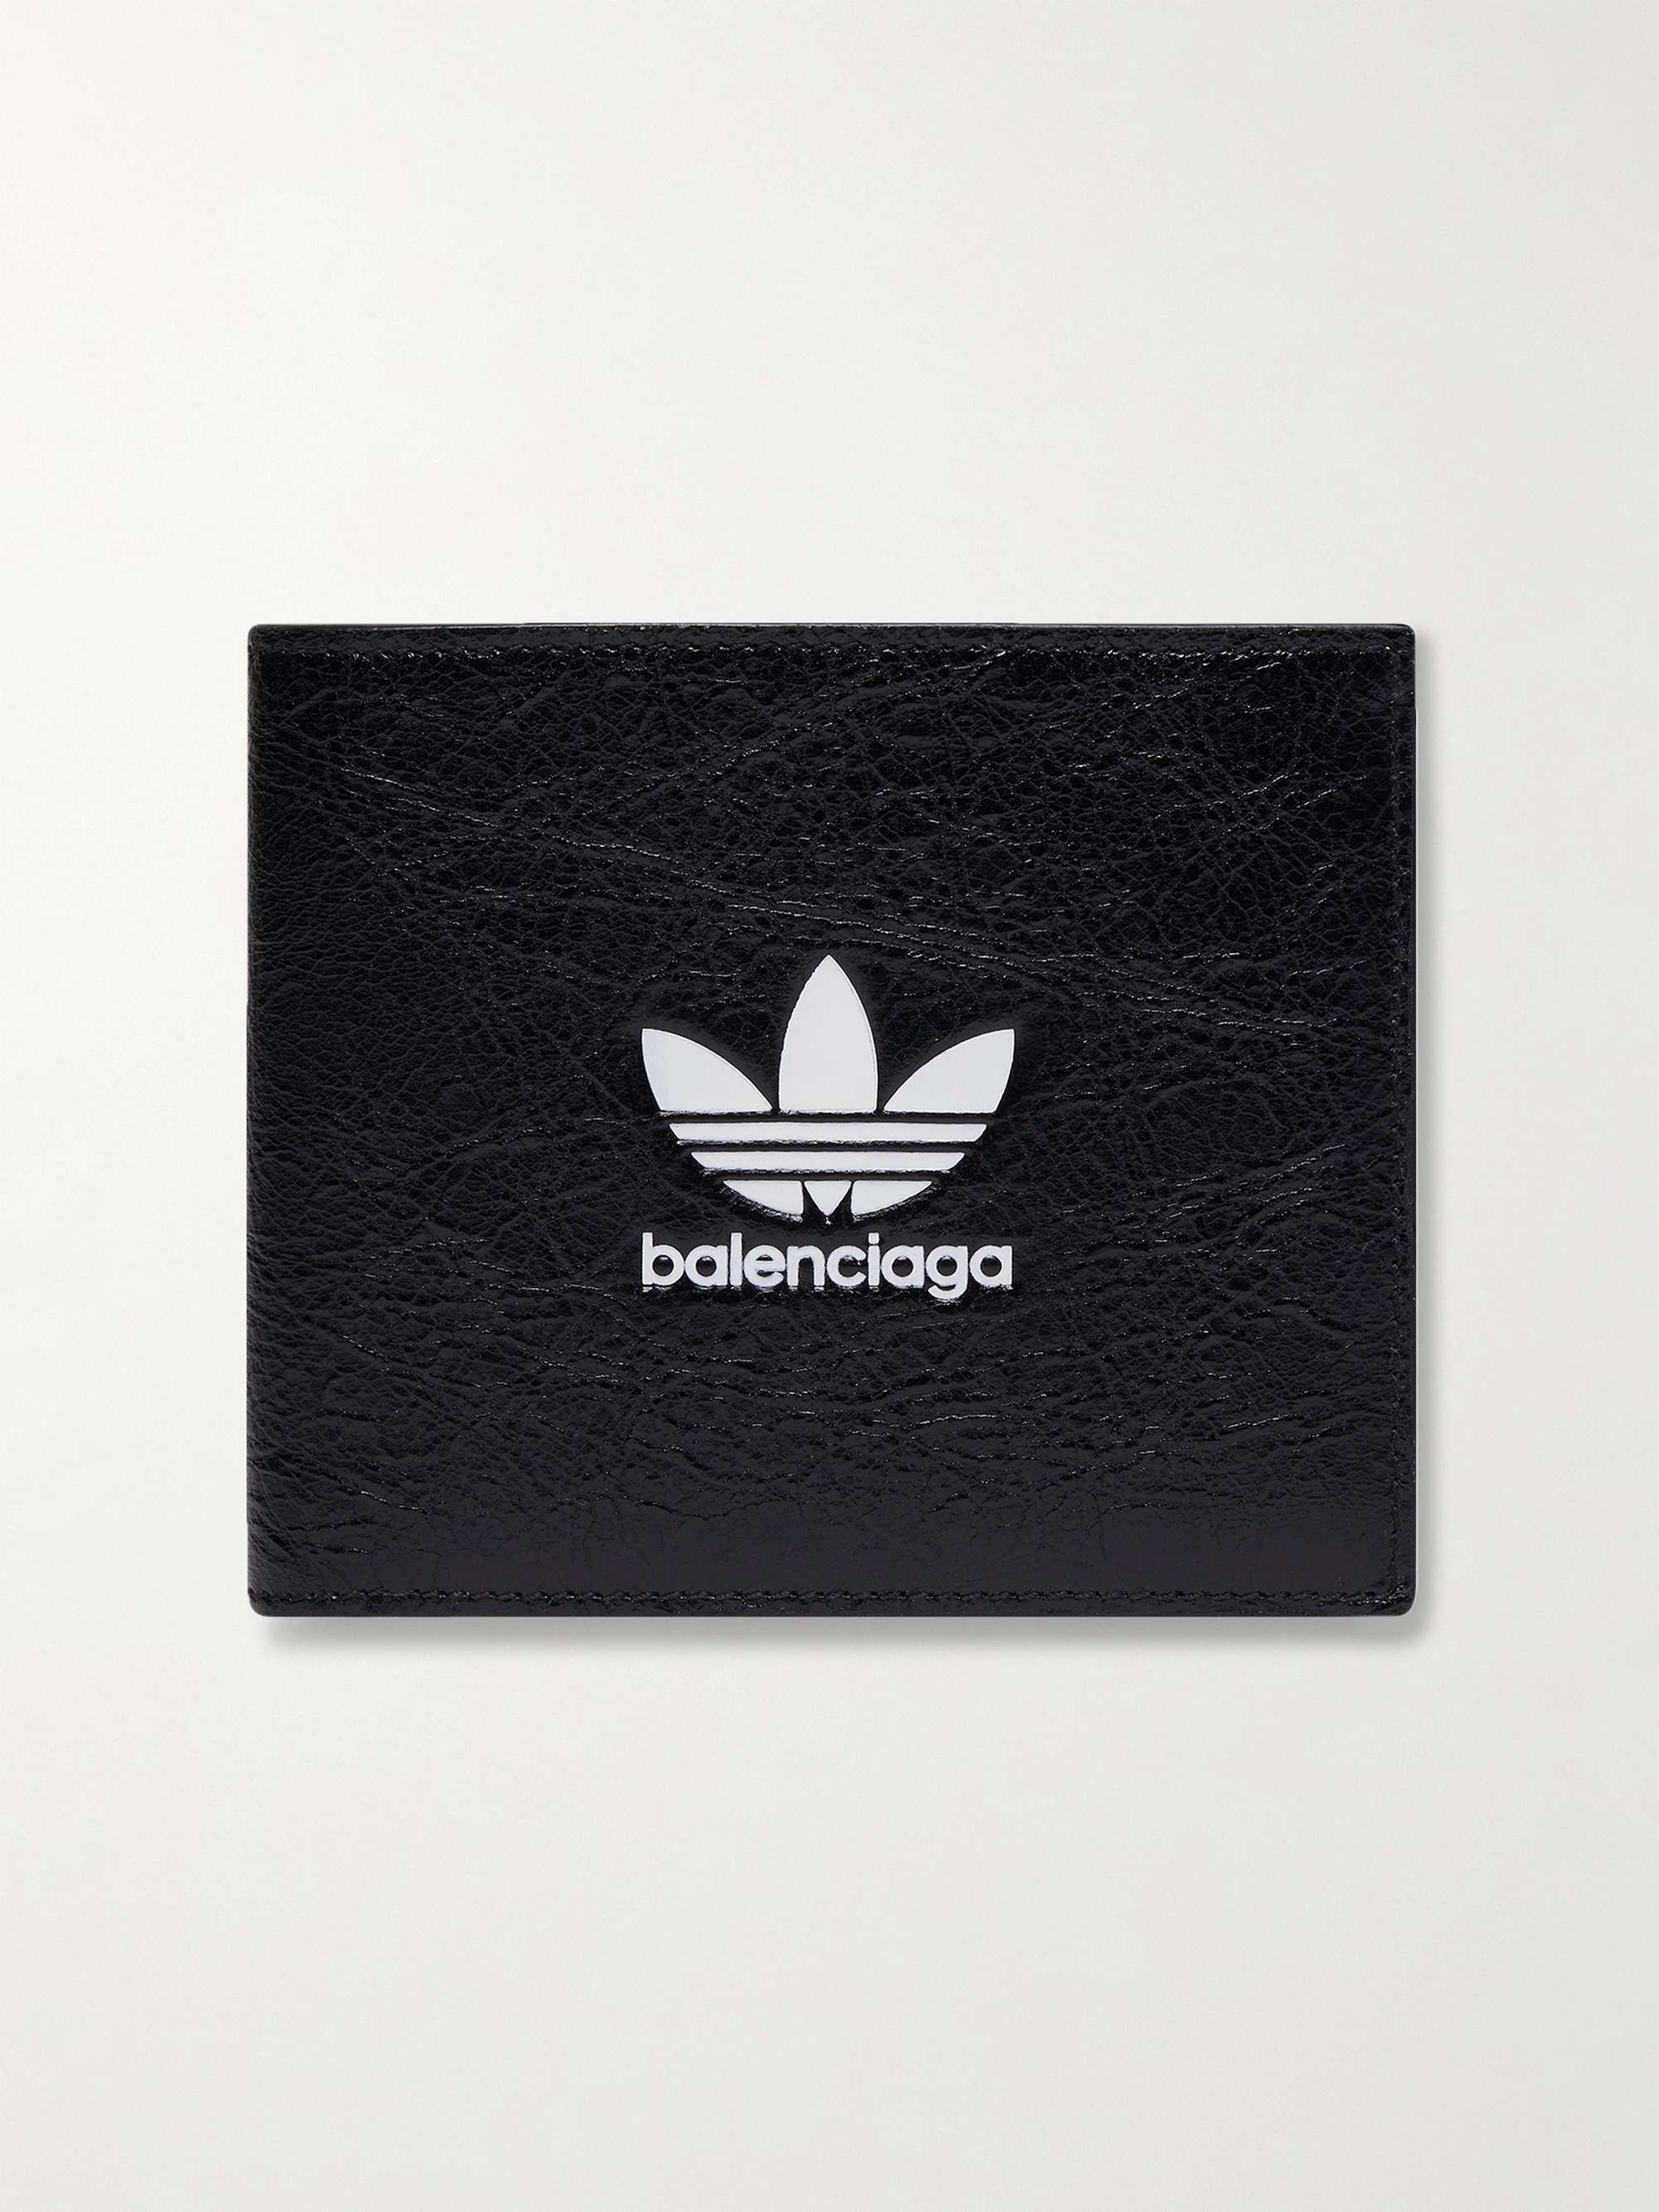 BALENCIAGA + adidas Logo-Print Textured-Leather Billfold Wallet | MR PORTER